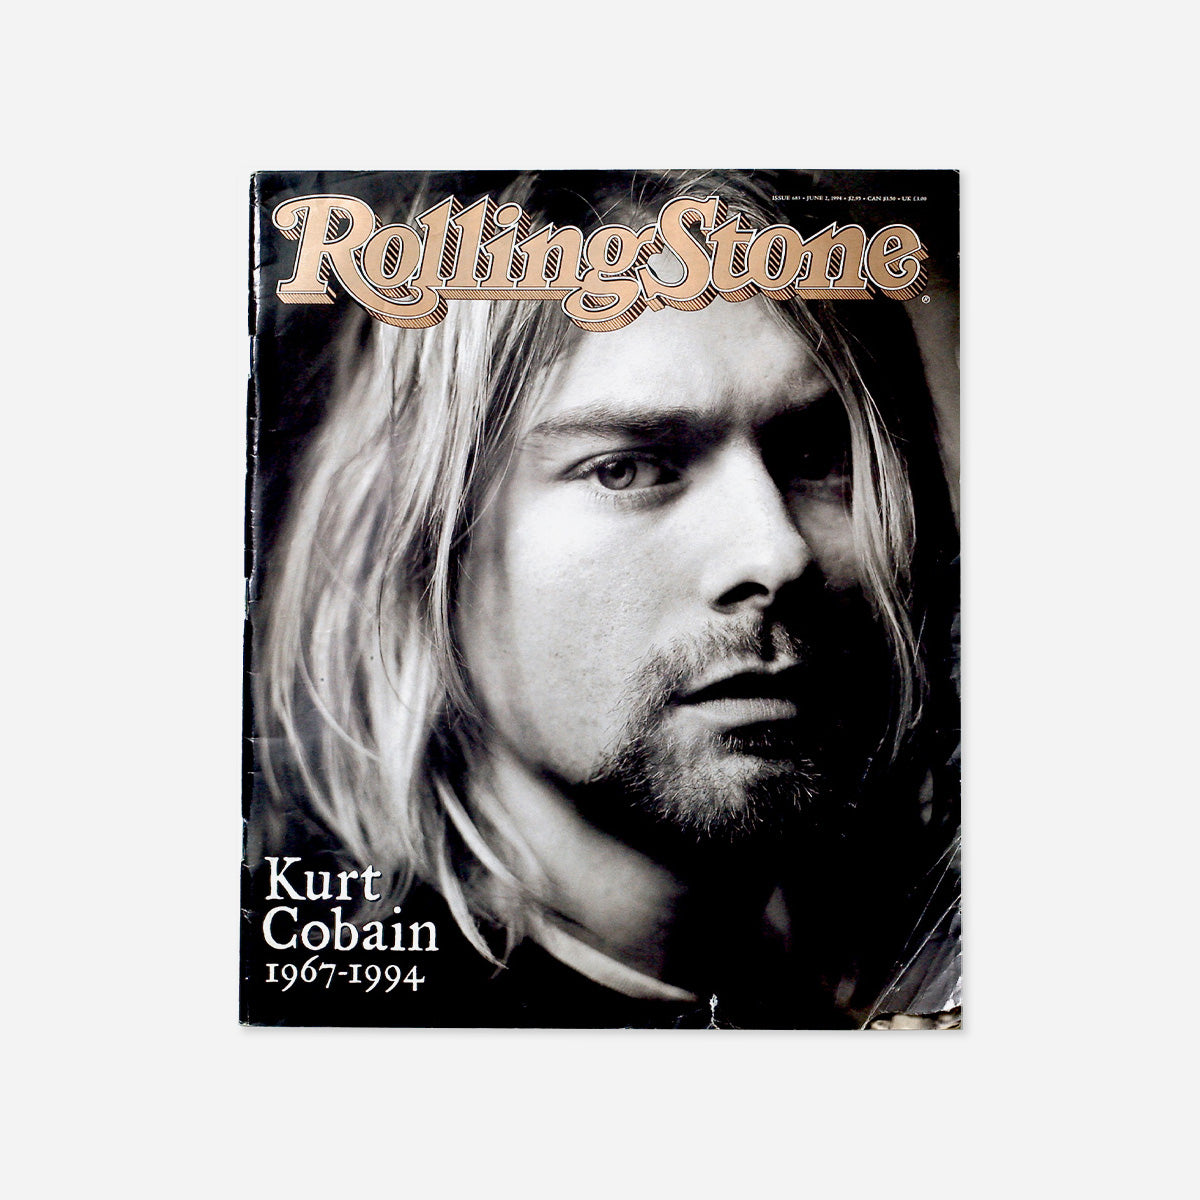 Rolling Stone Magazine June 2, 1994 Featuring Kurt Cobain (Issue 683)